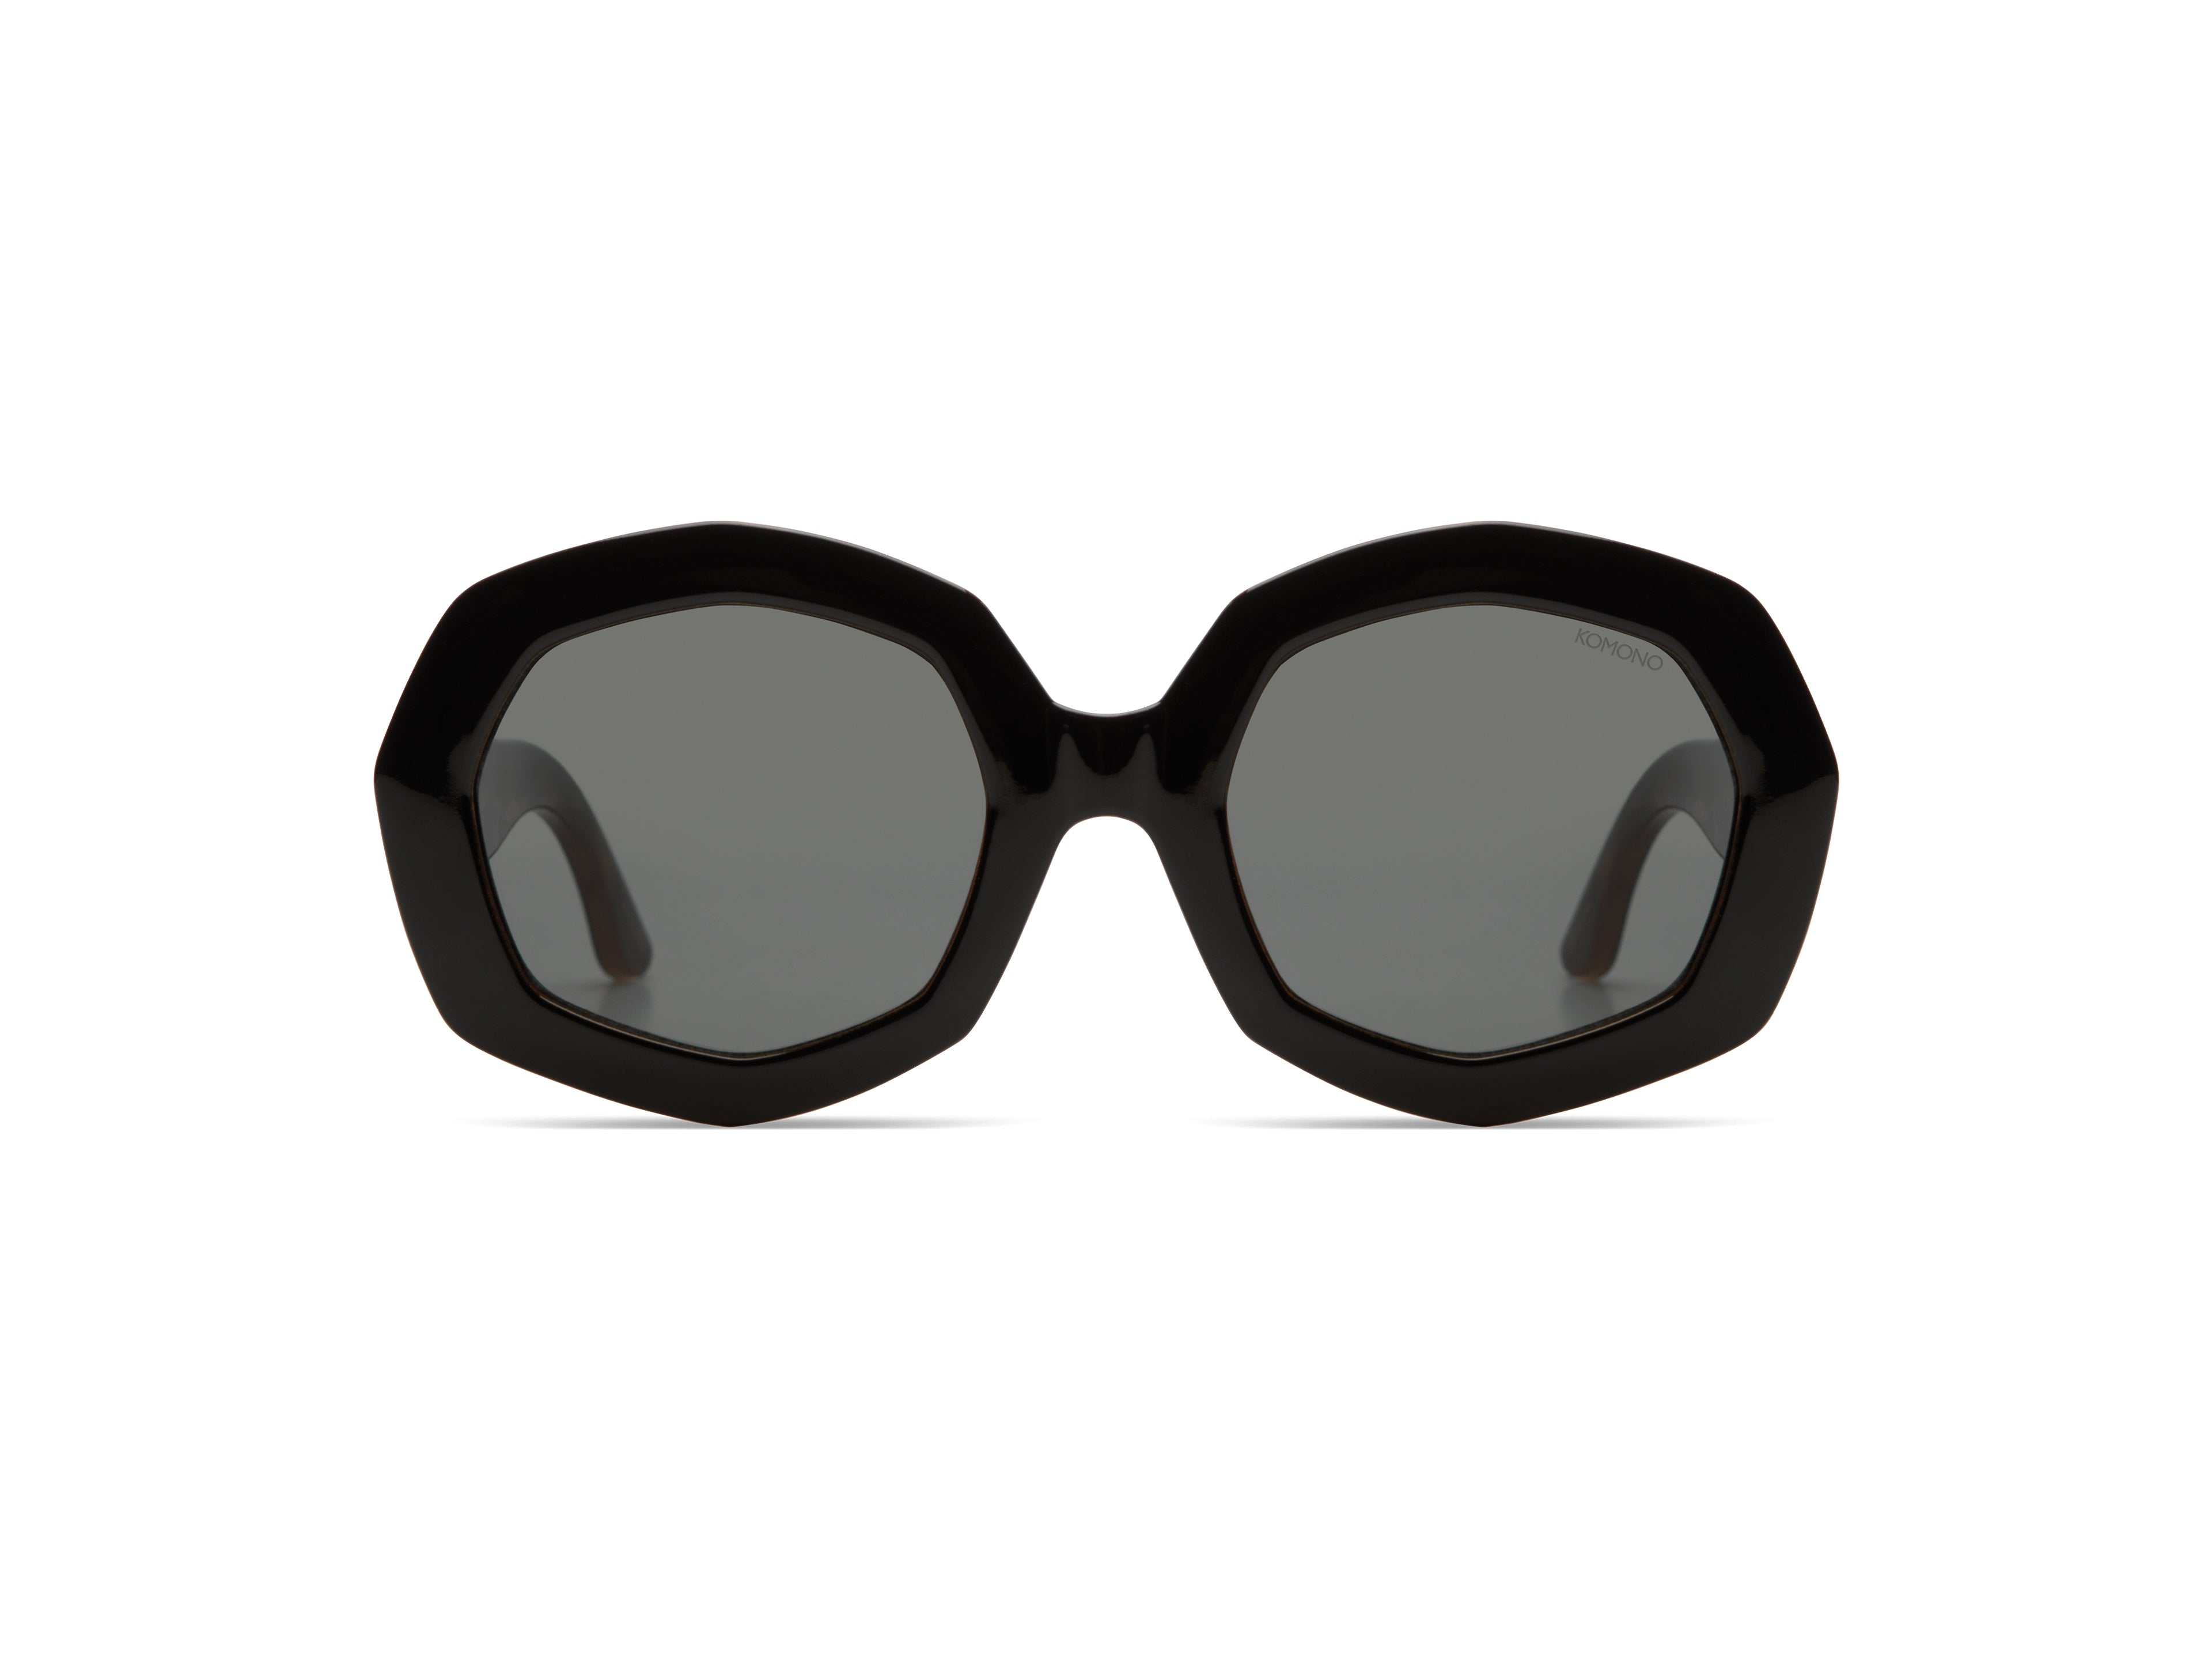 Komono Black Tortoise Amy Sunglasses